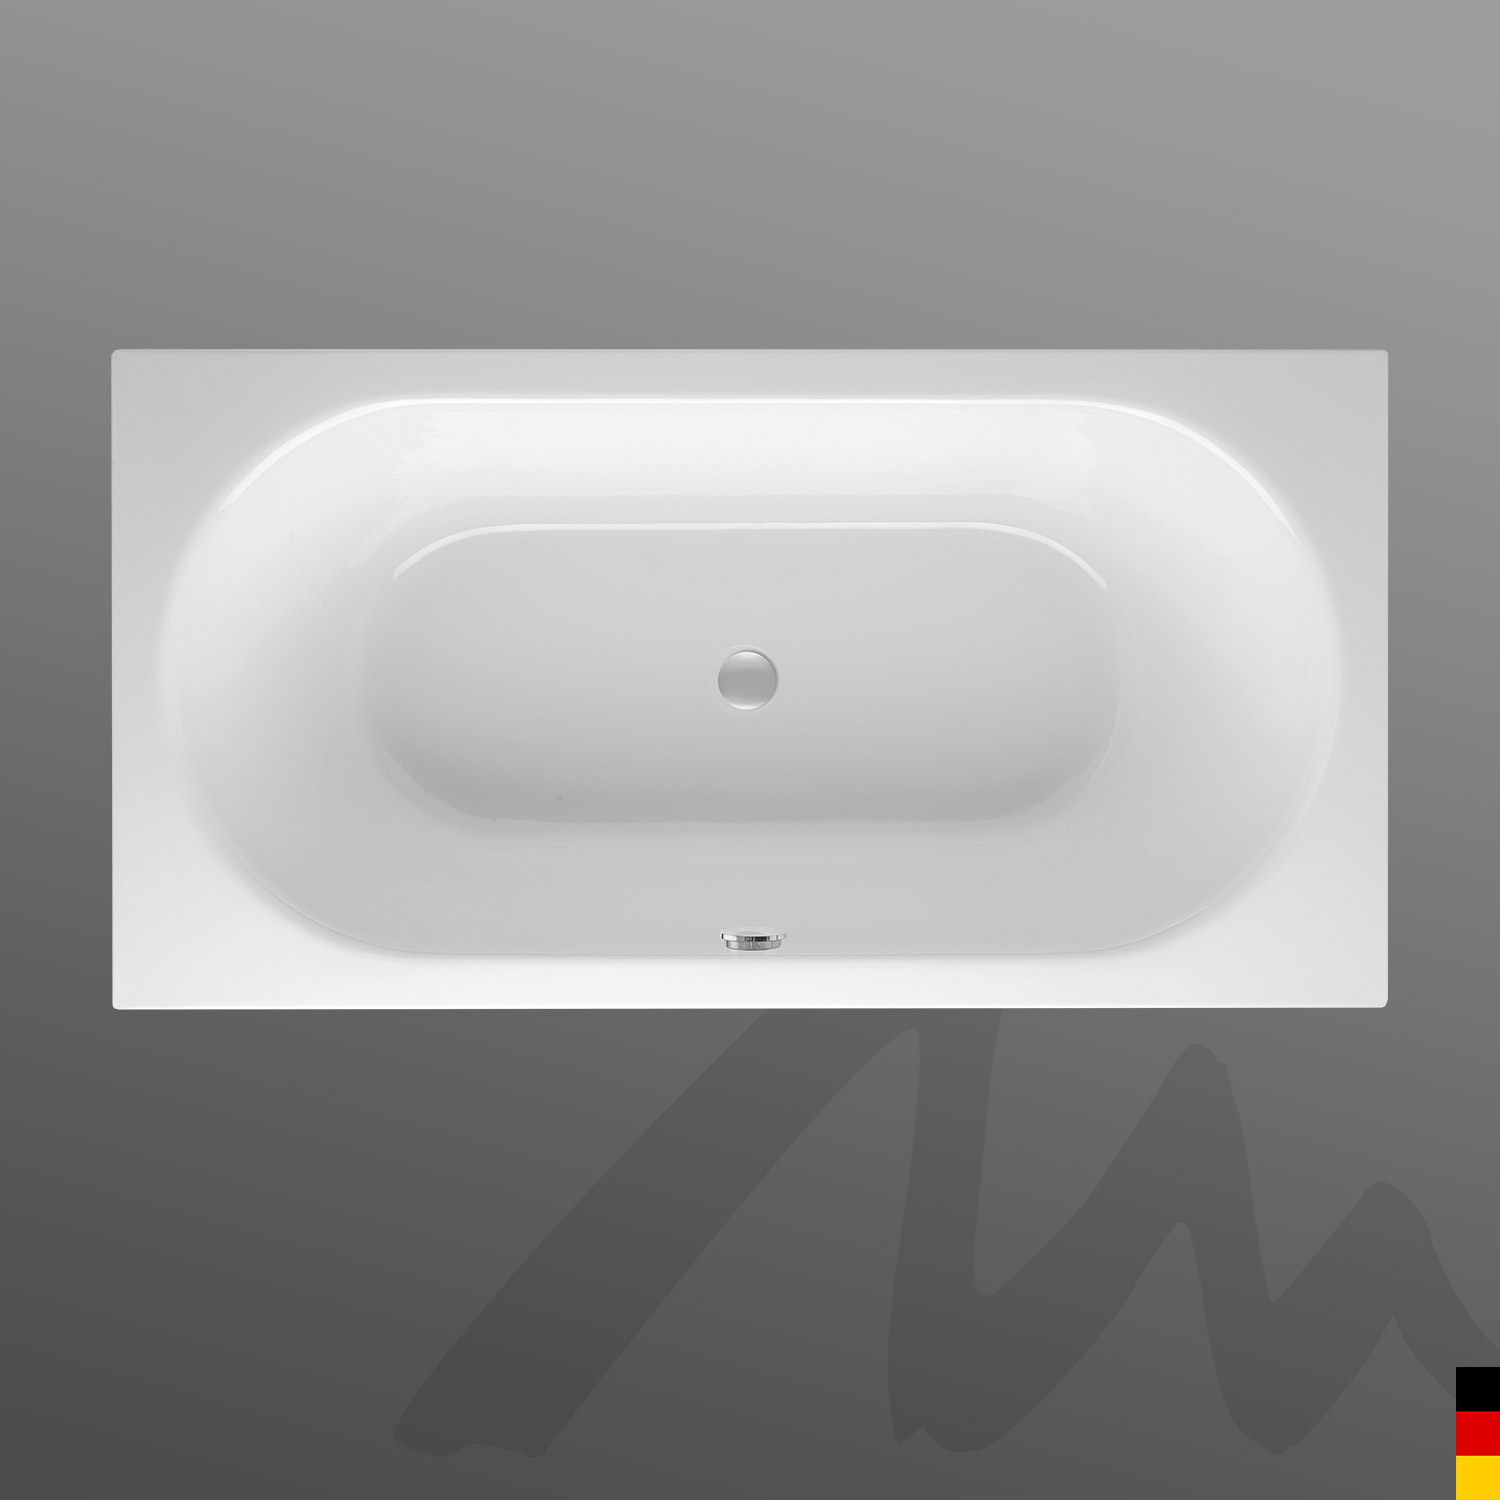 Mauersberger Badewanne Rechteck Ausana 185/95 duo  185x95x46cm  Farbe:weiß